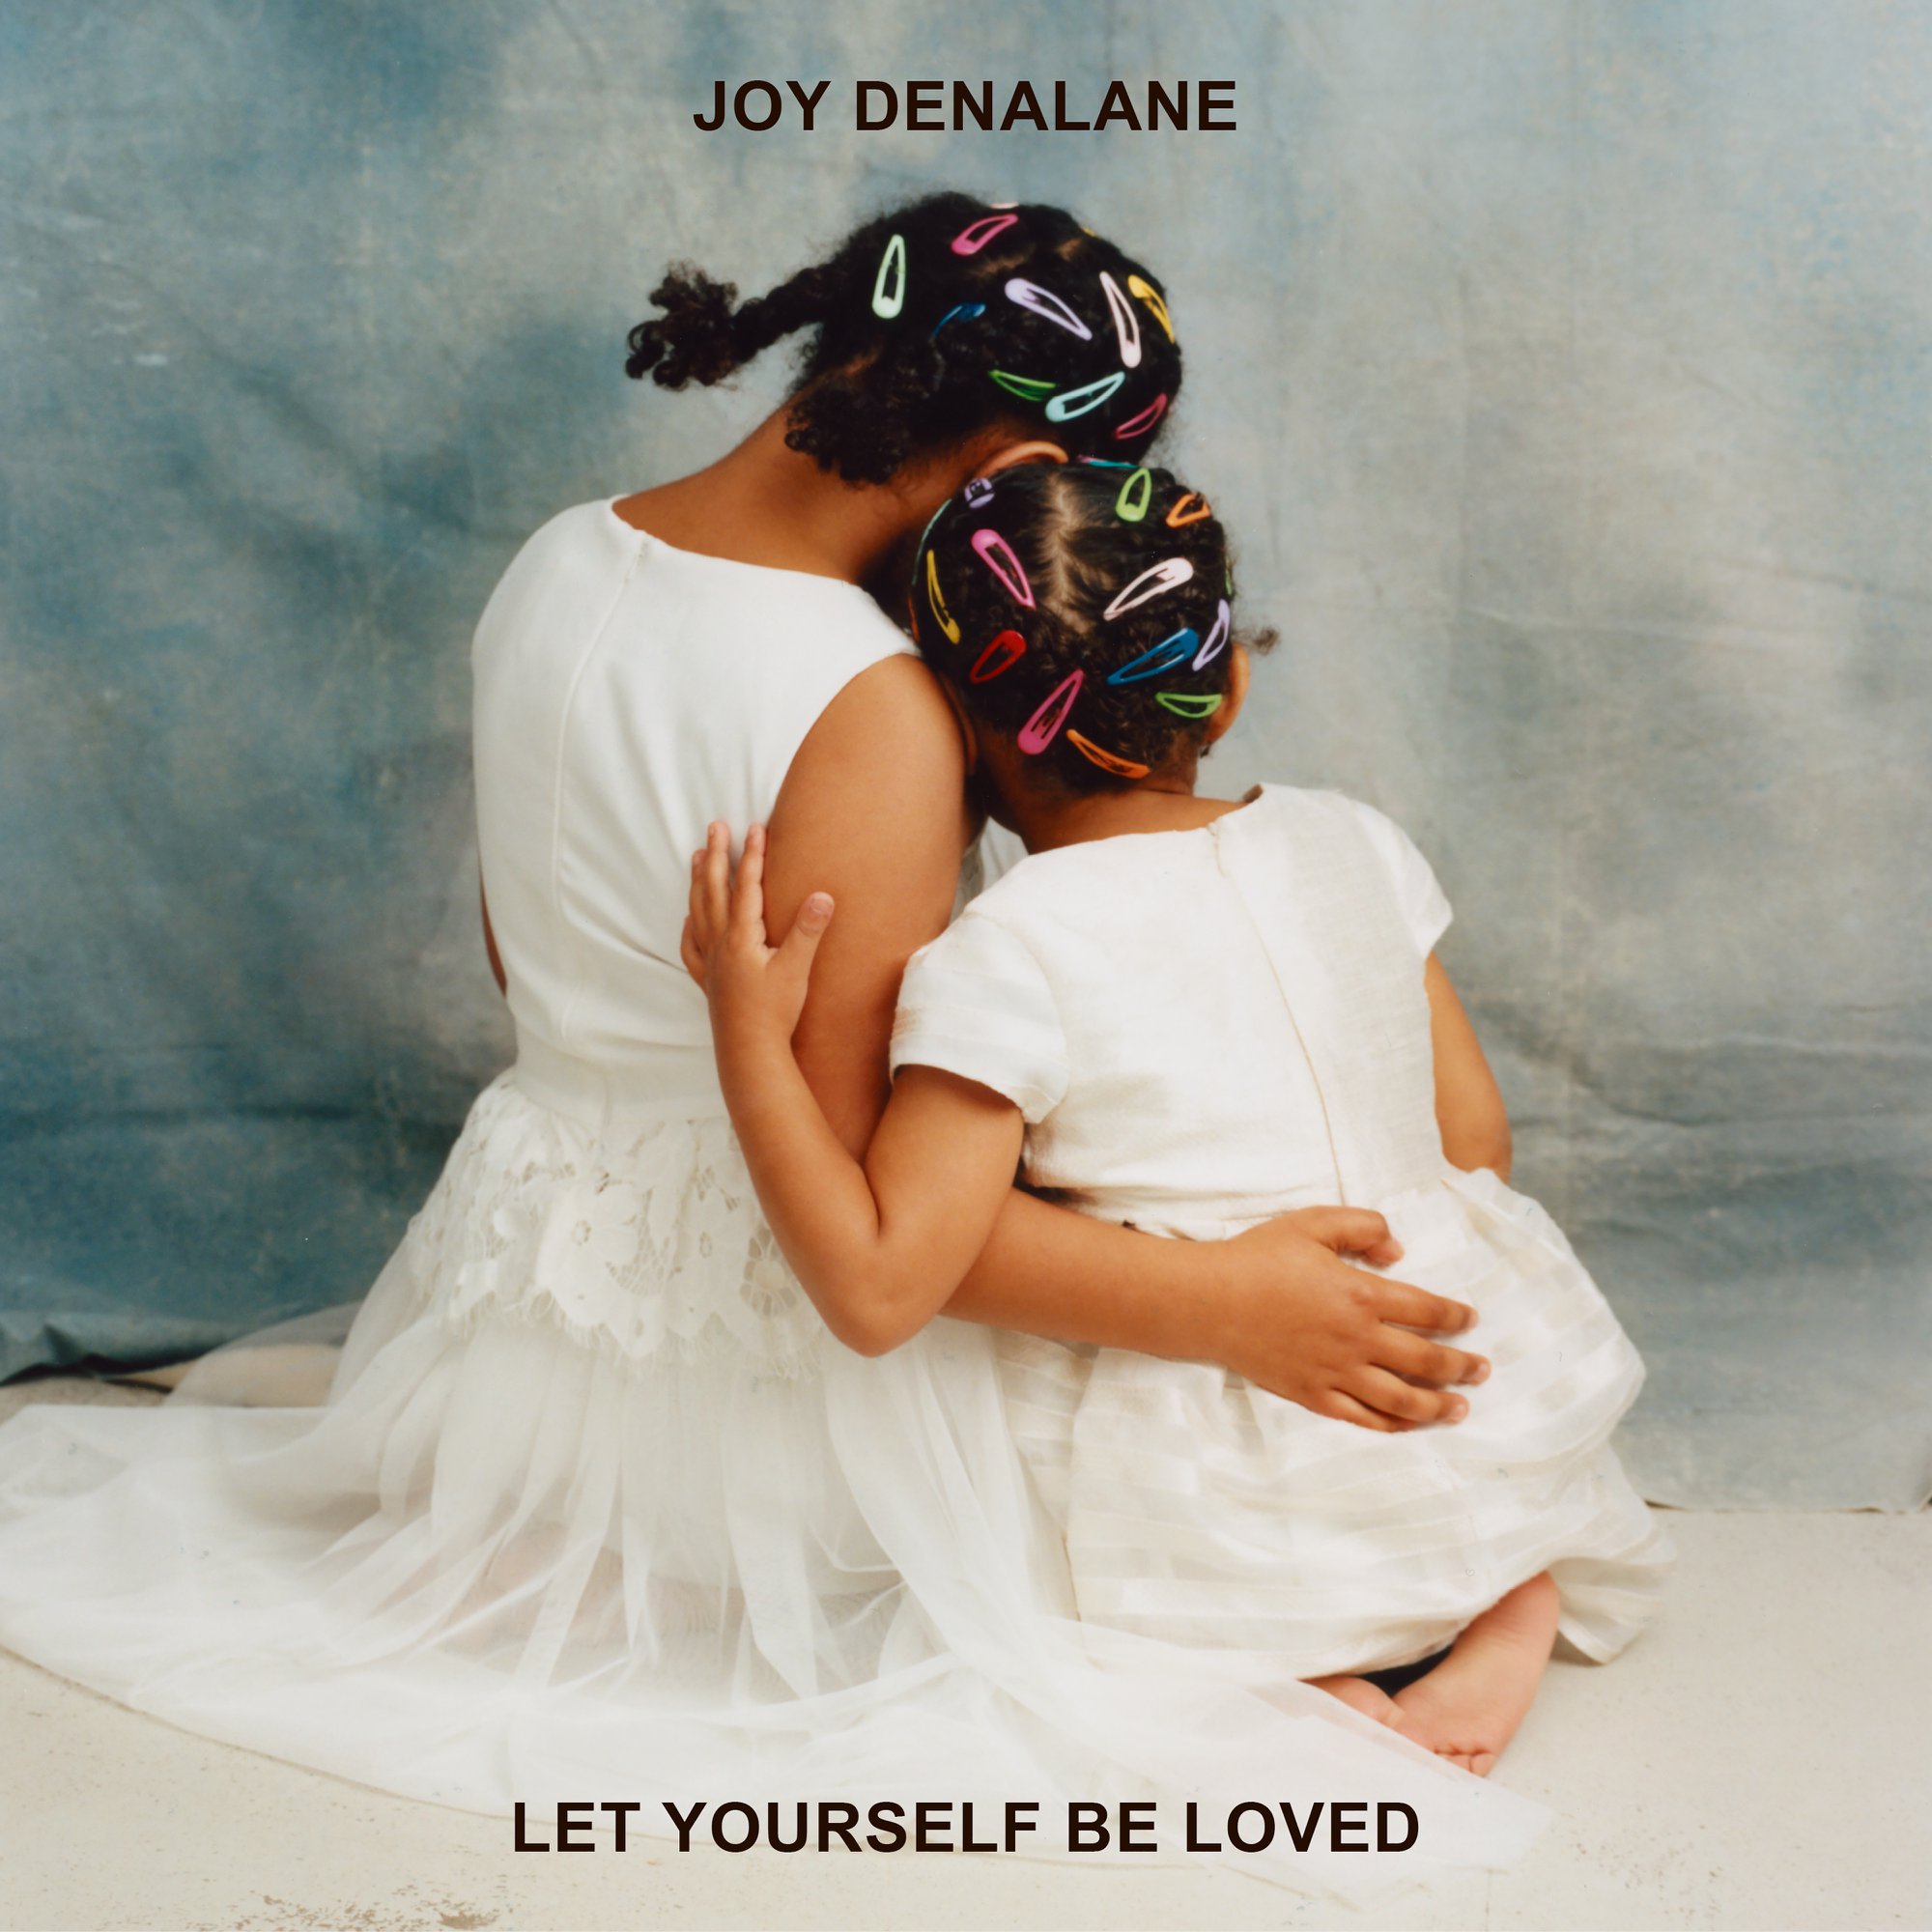 New Music: Joy Denalane - Let Yourself Be Loved (Album Stream)